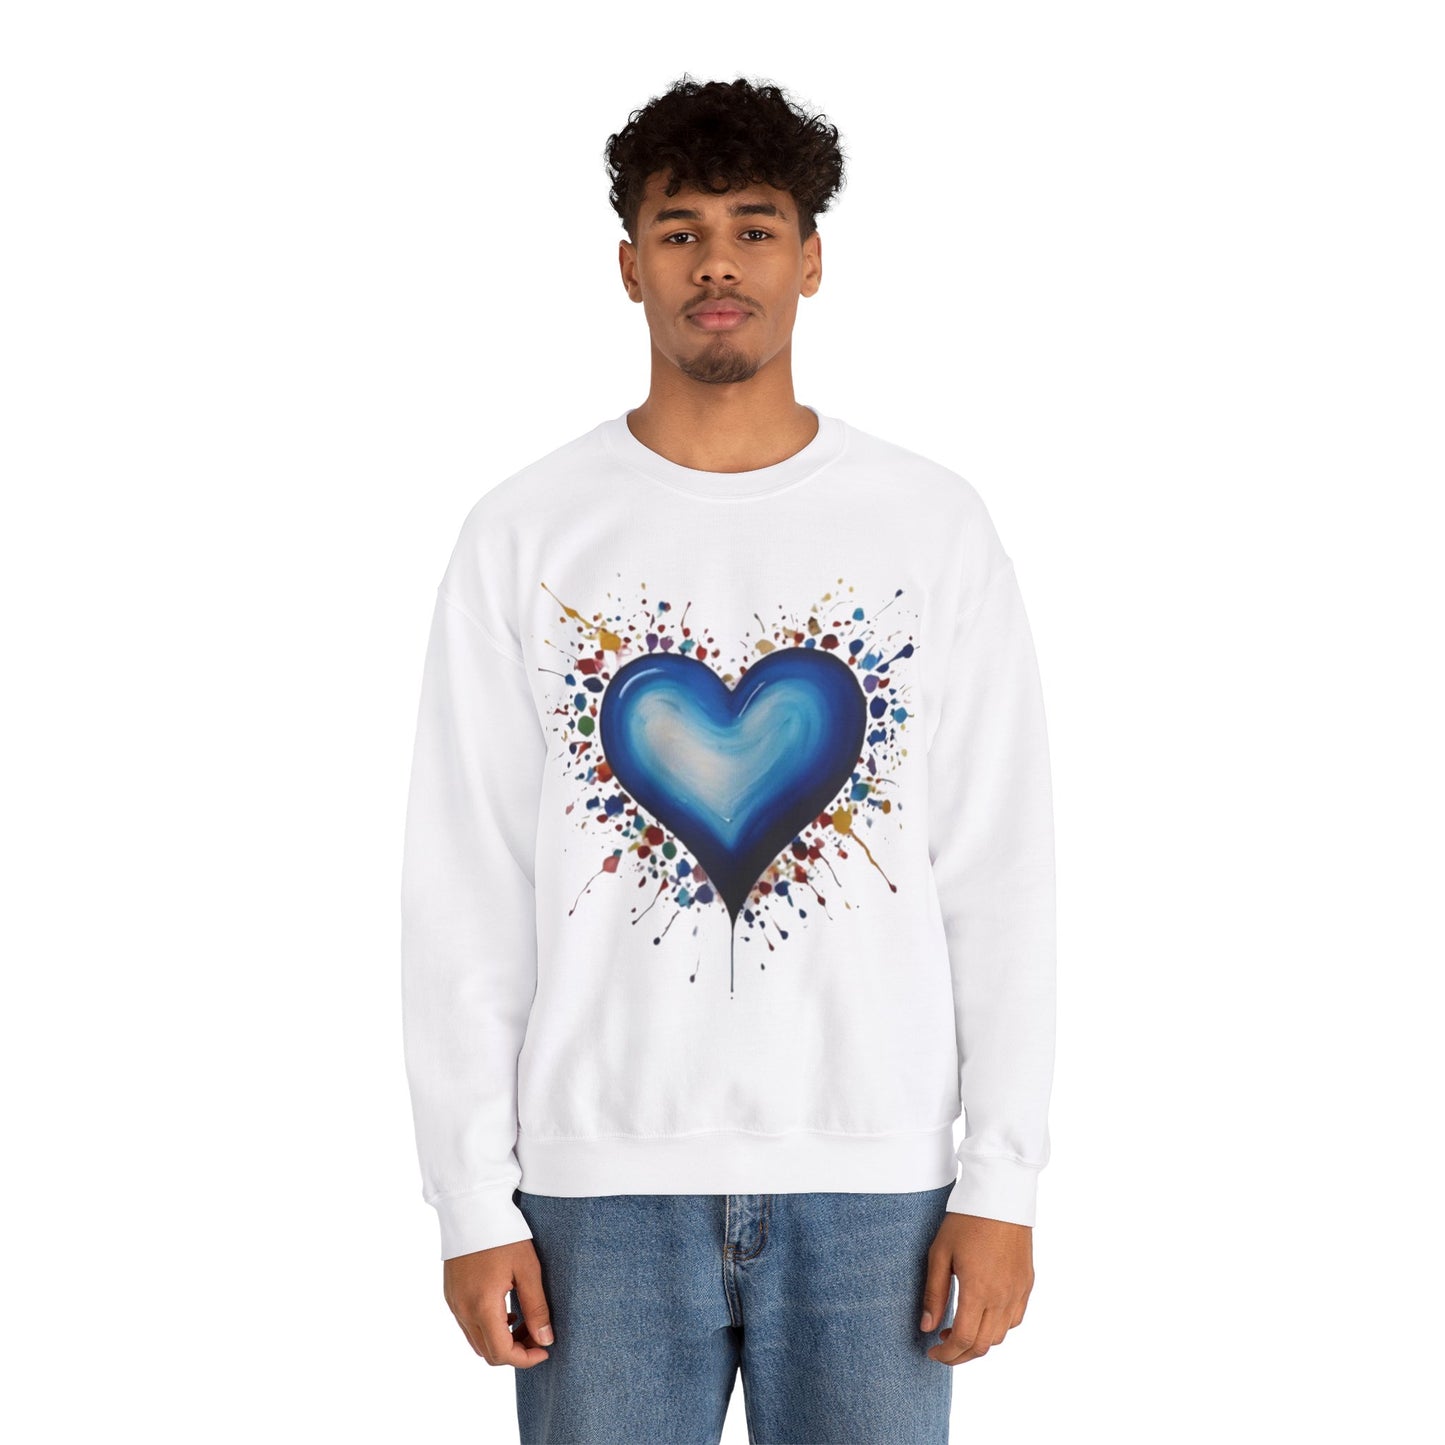 Messy Splatter Blue Love Heart - Unisex Crewneck Sweatshirt